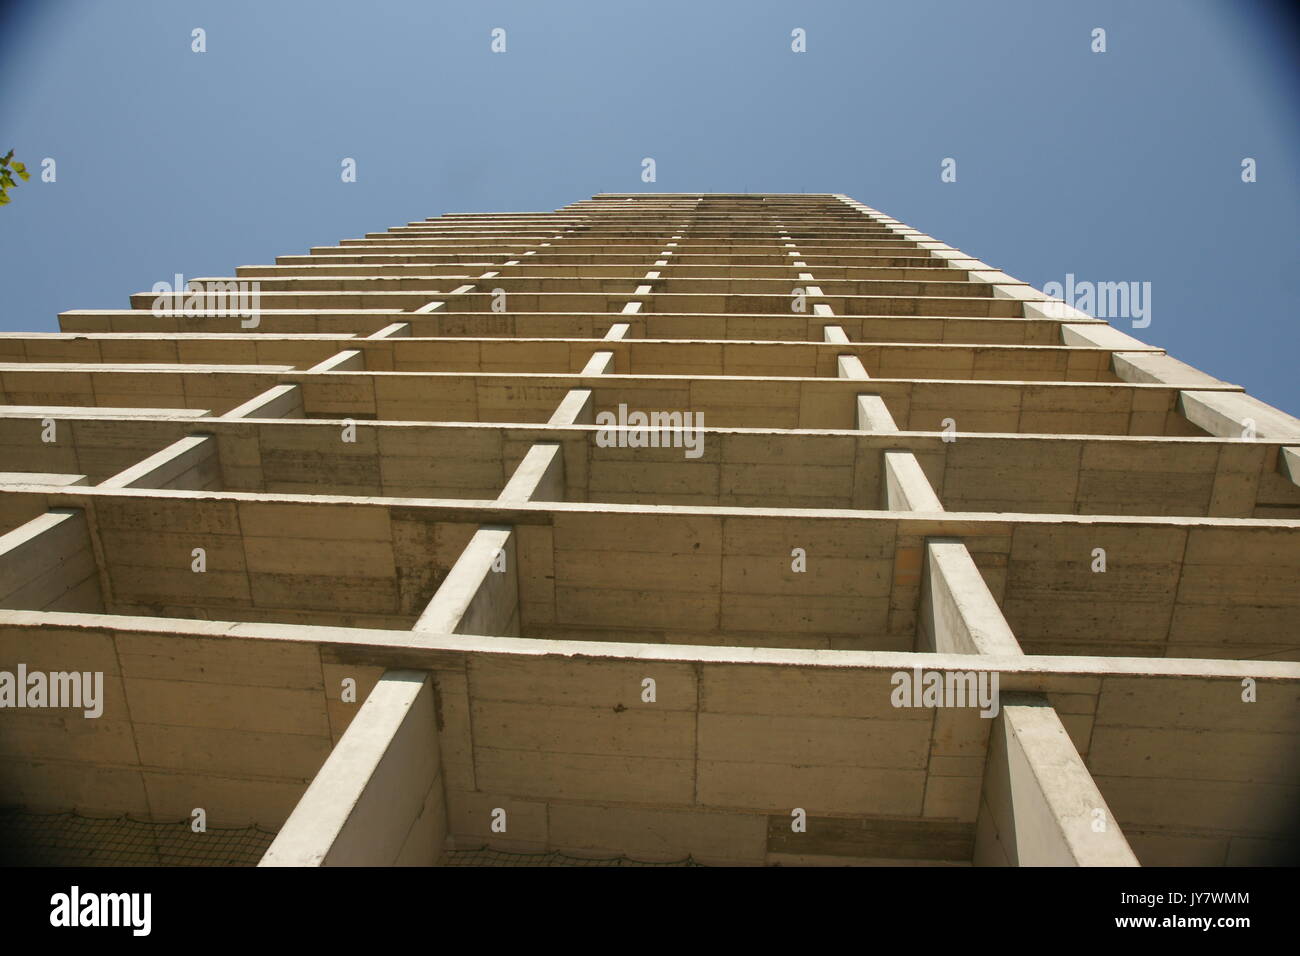 new development, hight rise city building Stock Photo